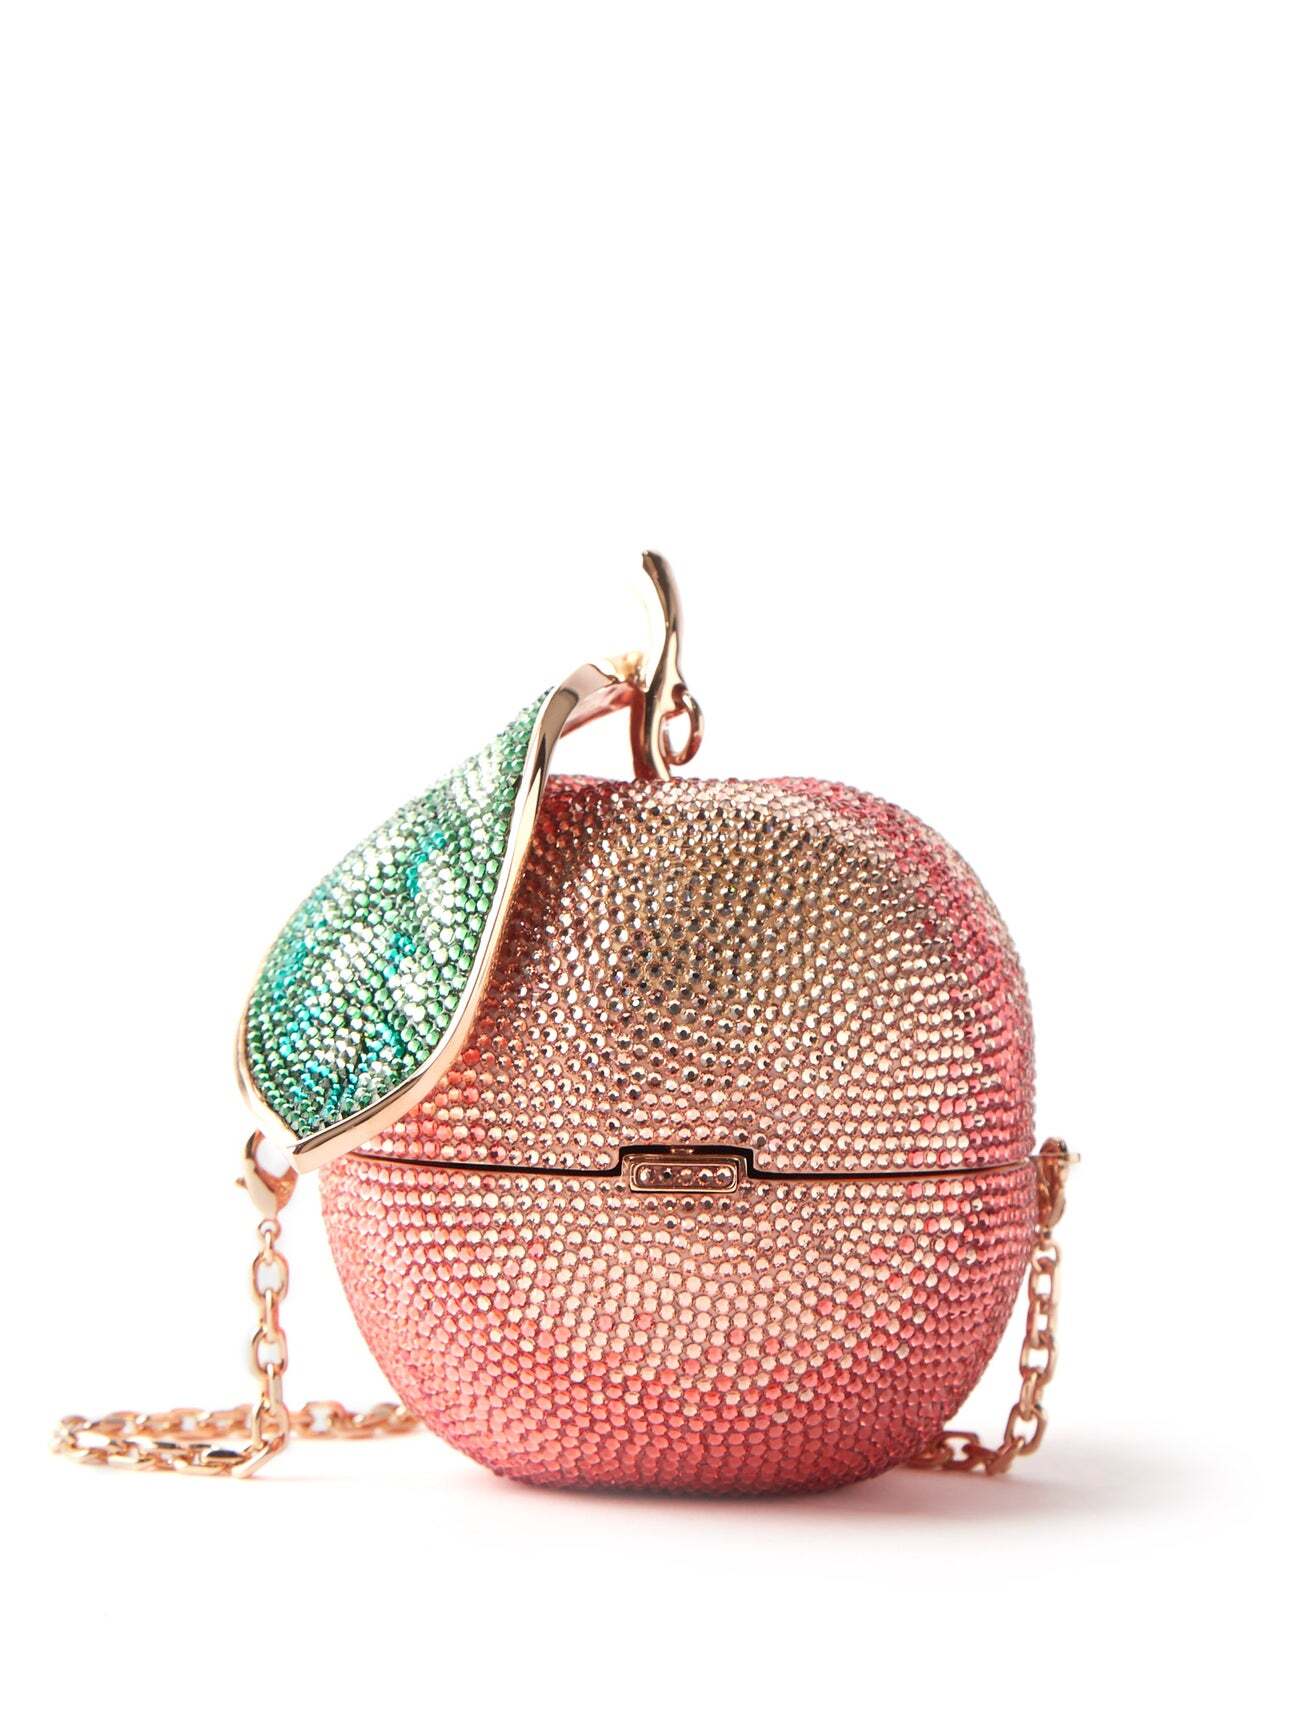 Judith Leiber - Peach Crystal-embellished Clutch - Womens - Pink Multi